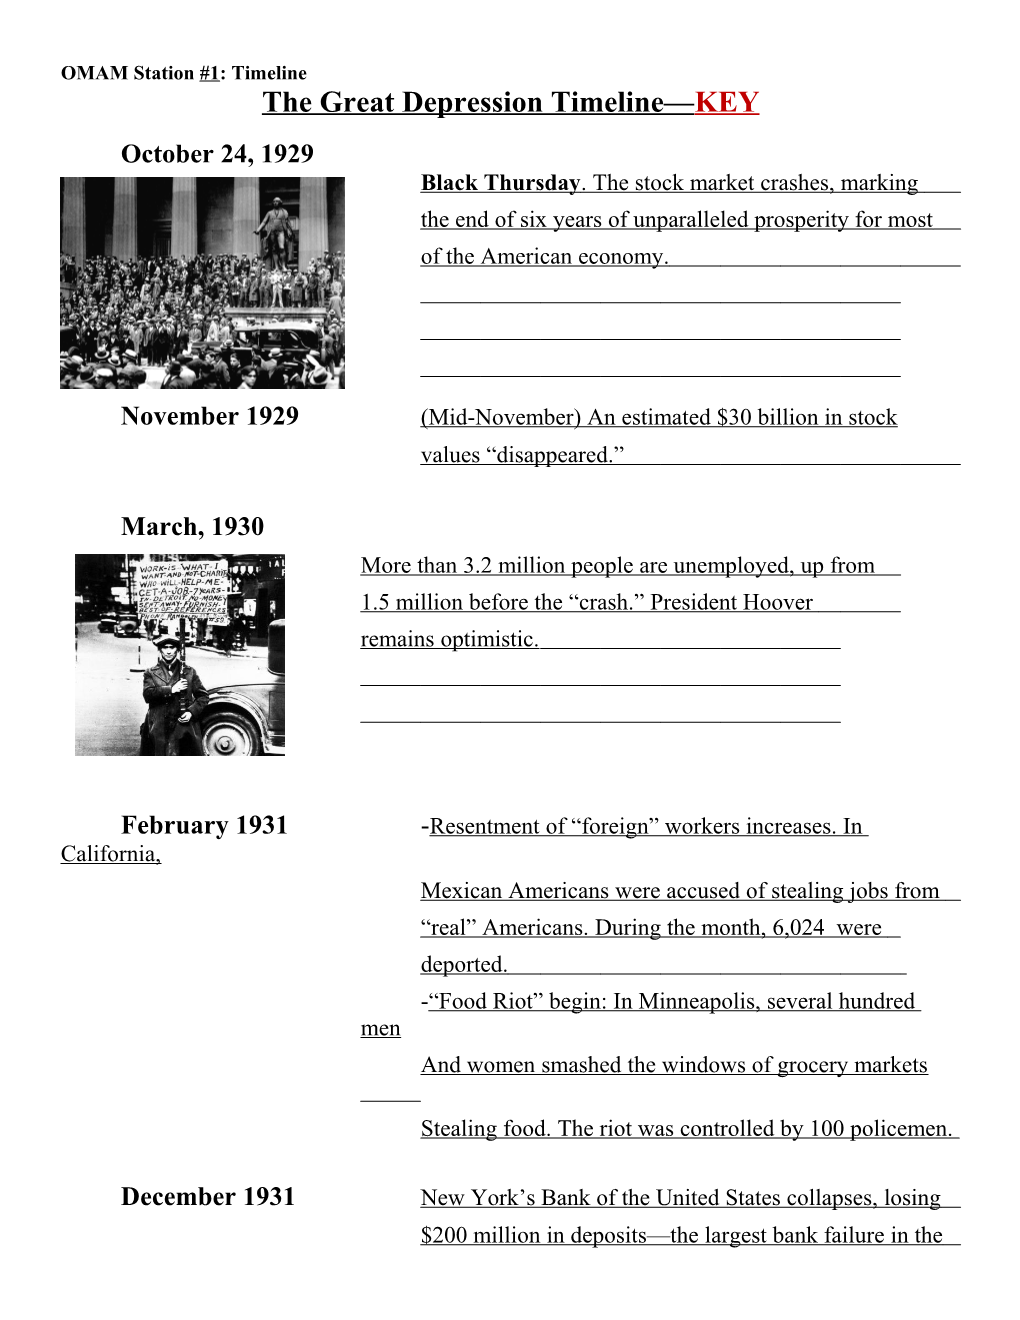 The Great Depression Timeline